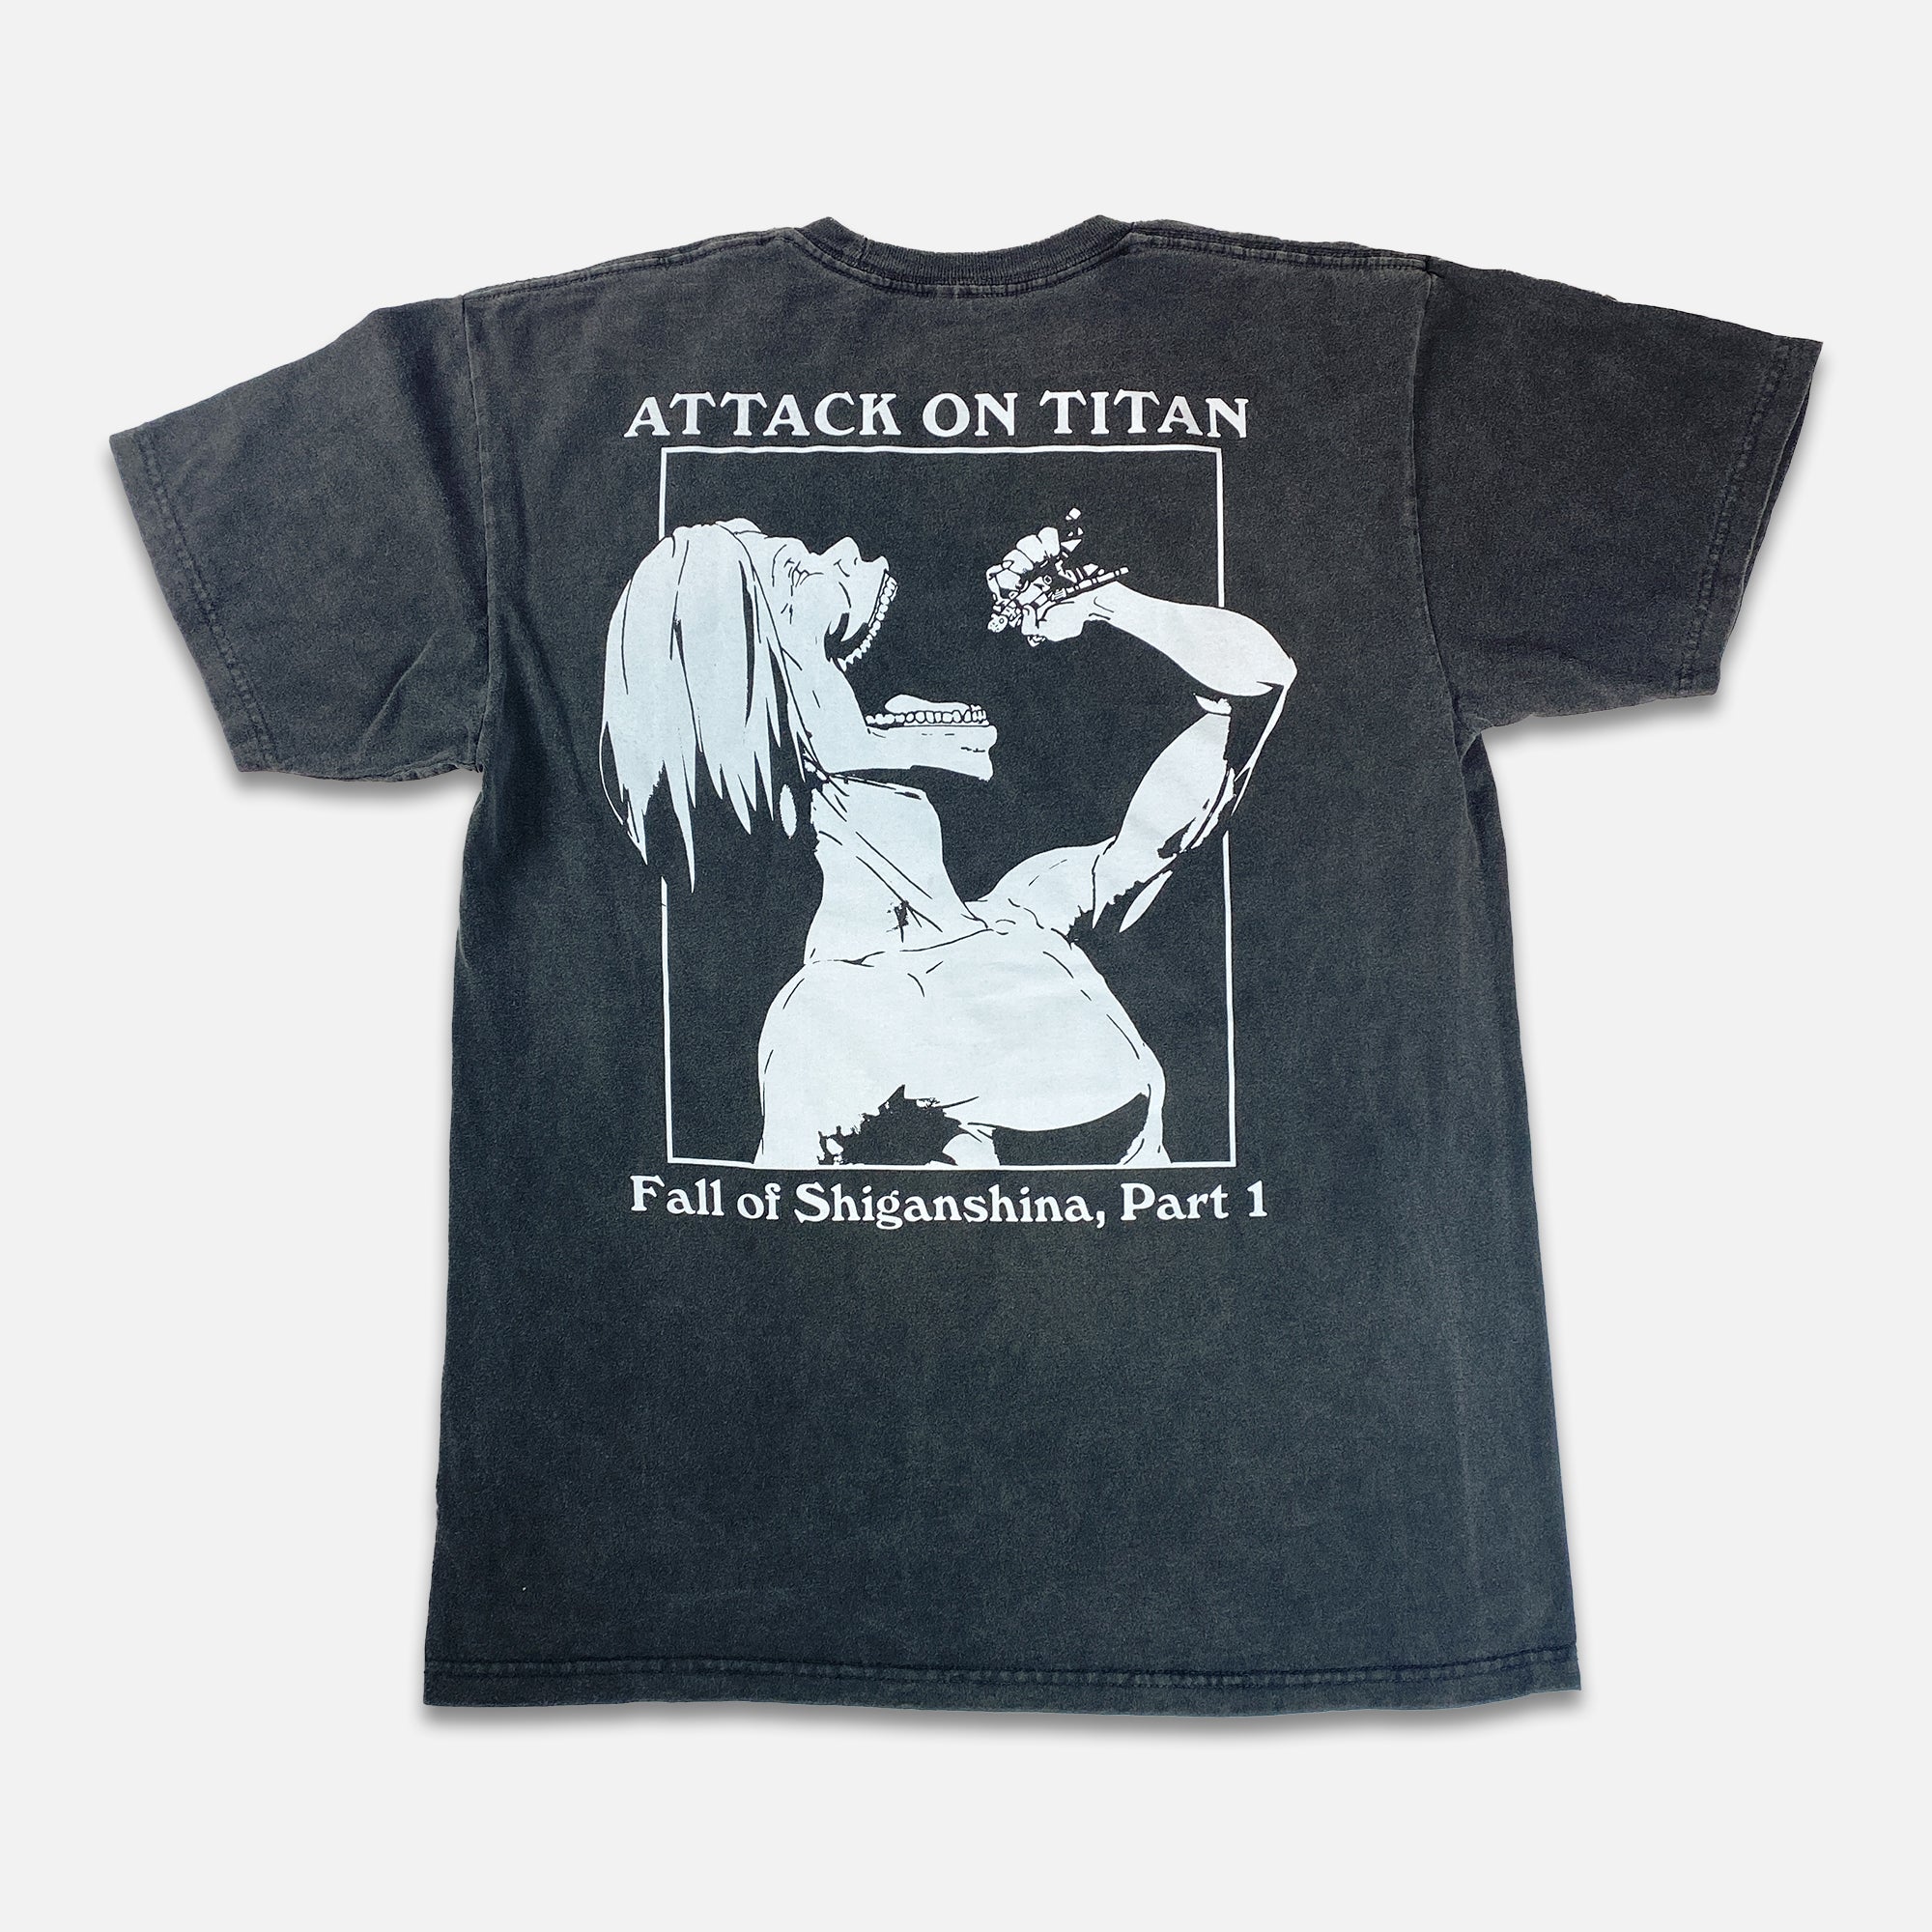 Attack on Titan - Fall of Shiganshina Pt. 1 T-Shirt - Crunchyroll Exclusive! image count 1